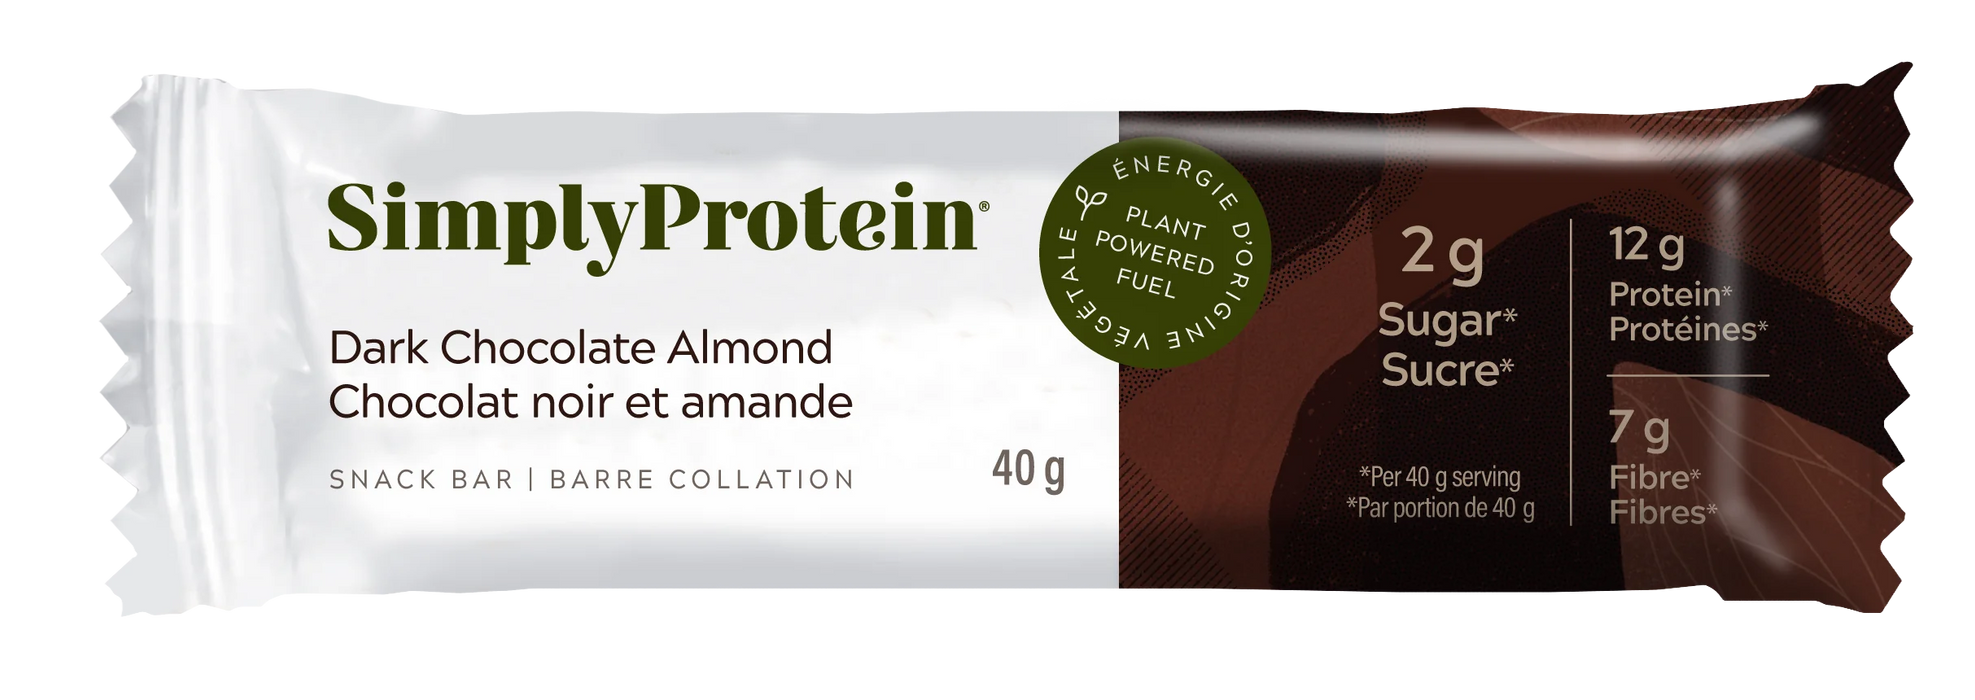 Simply Protein - Dark Chocolate Almond, 40 g